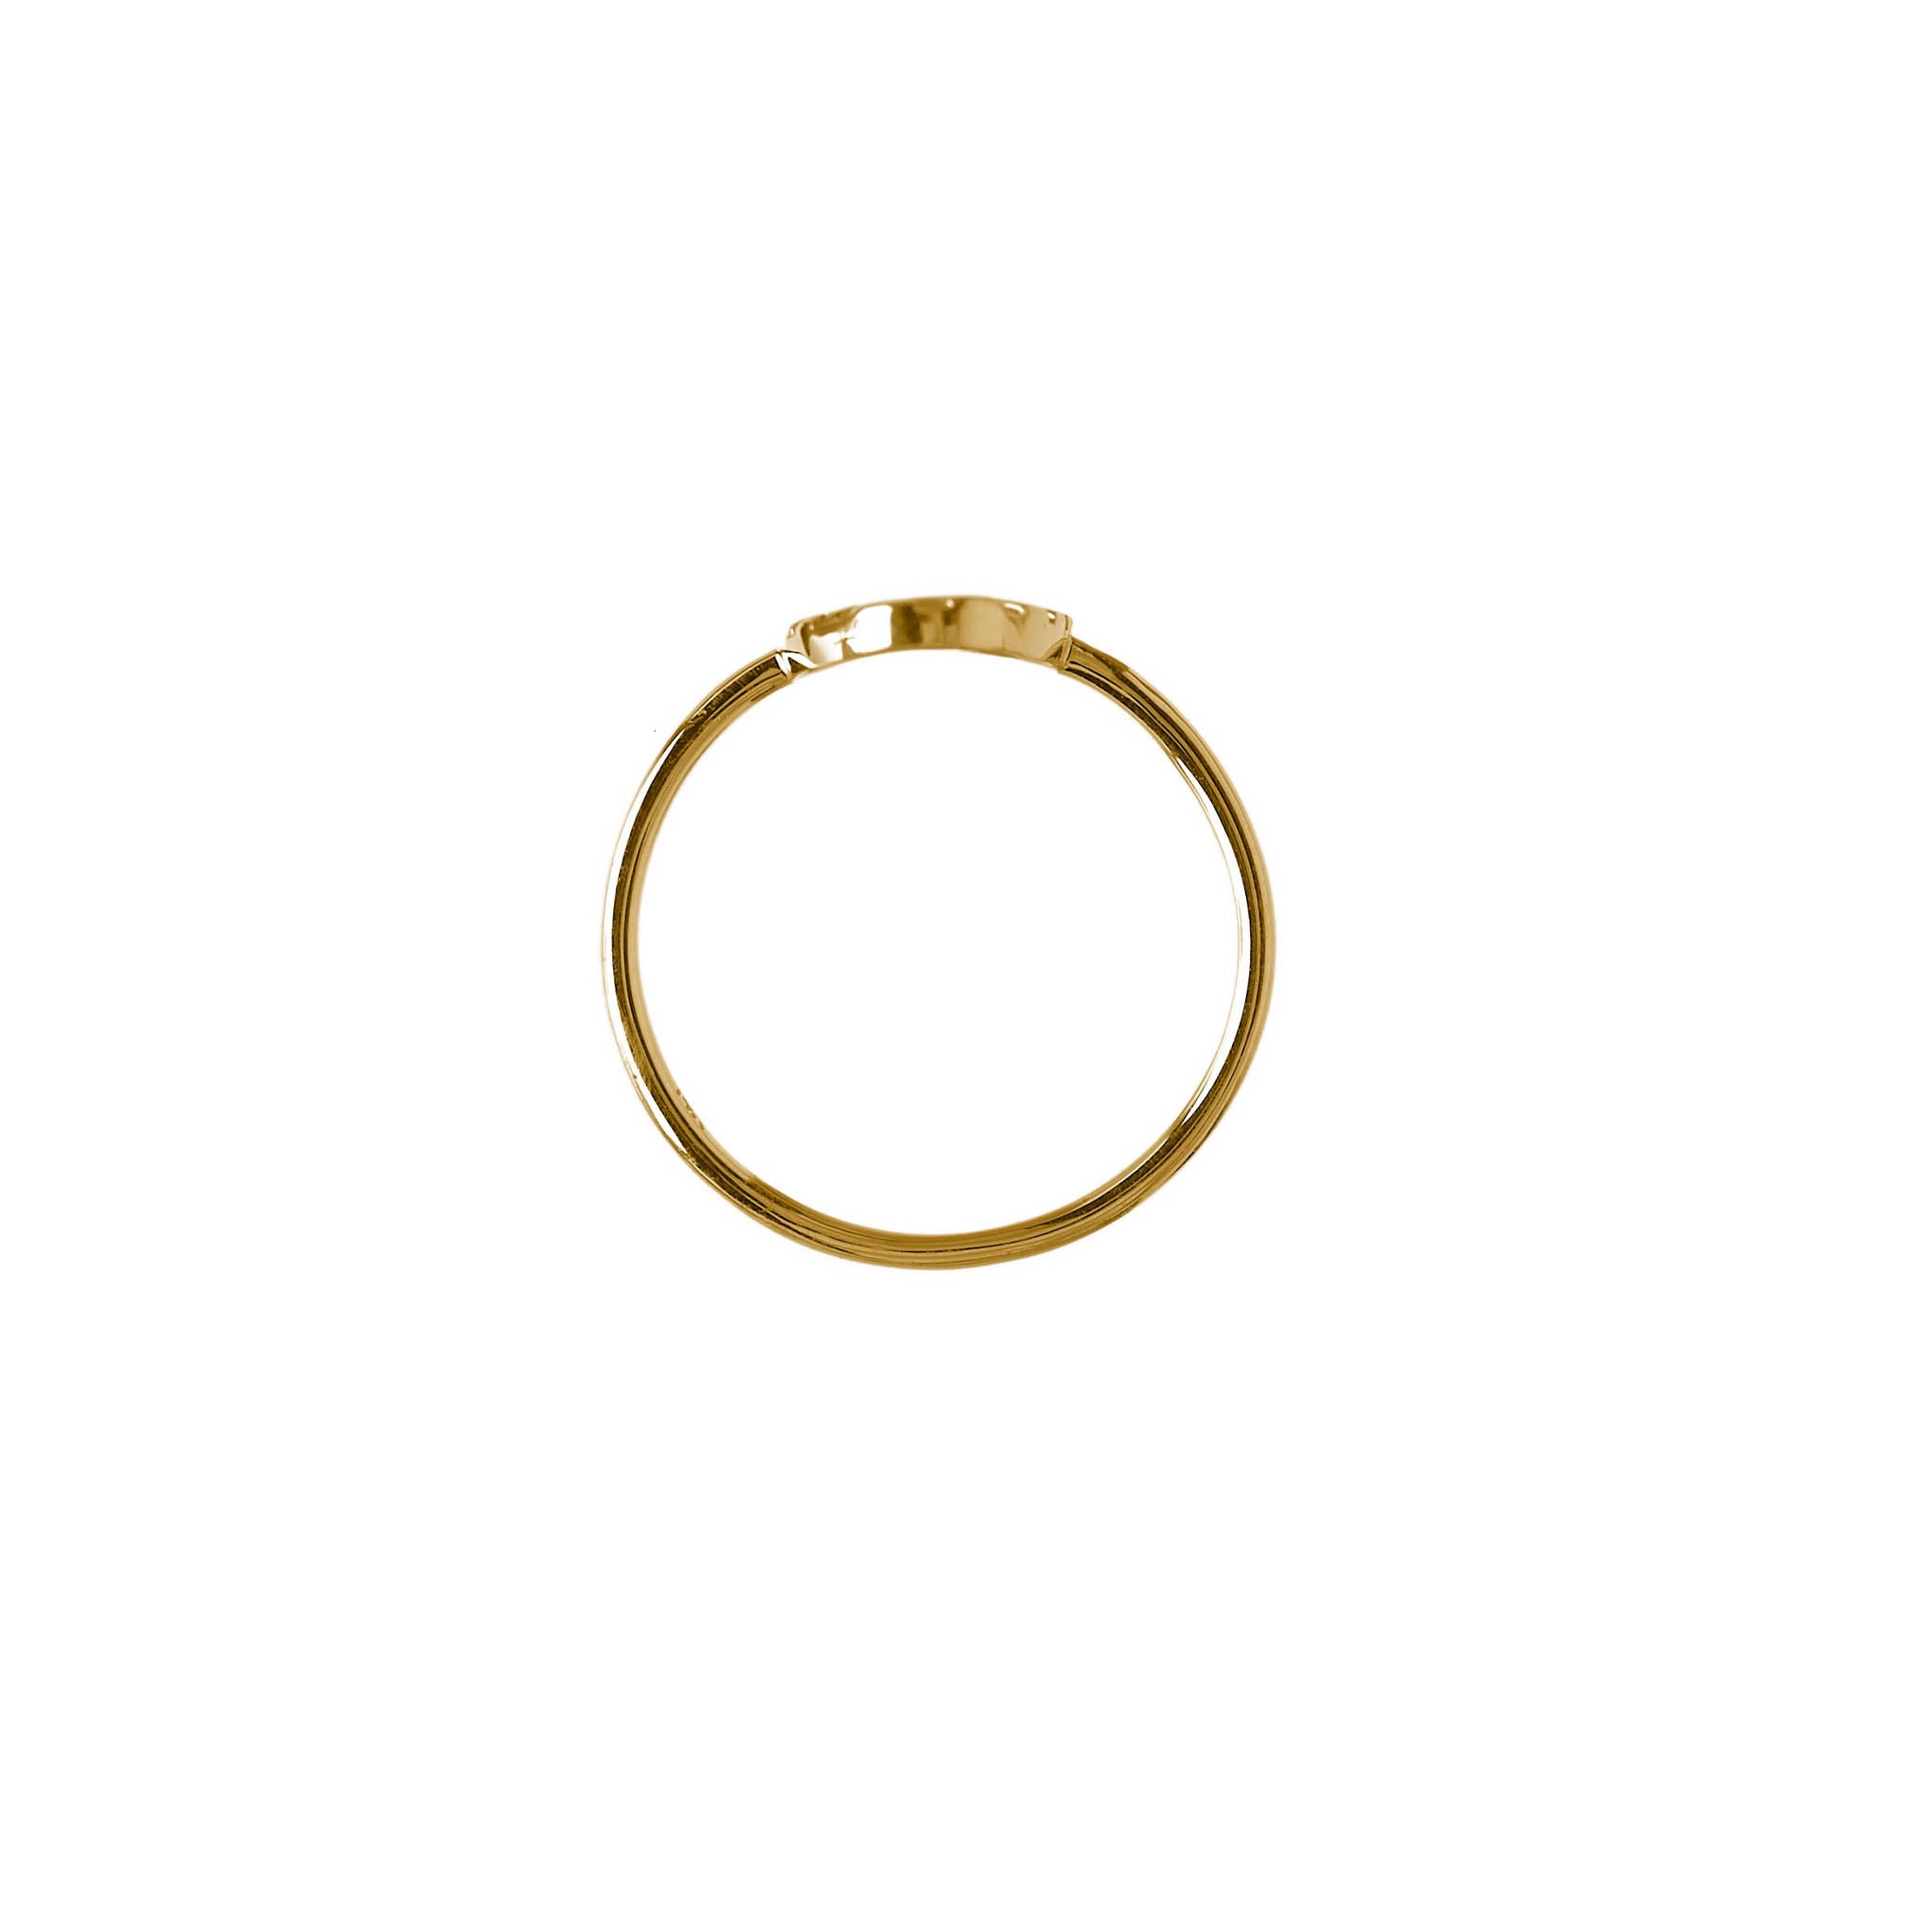 Minimalist solid 14k gold Nautilus statement ring. Every day fine jewelry